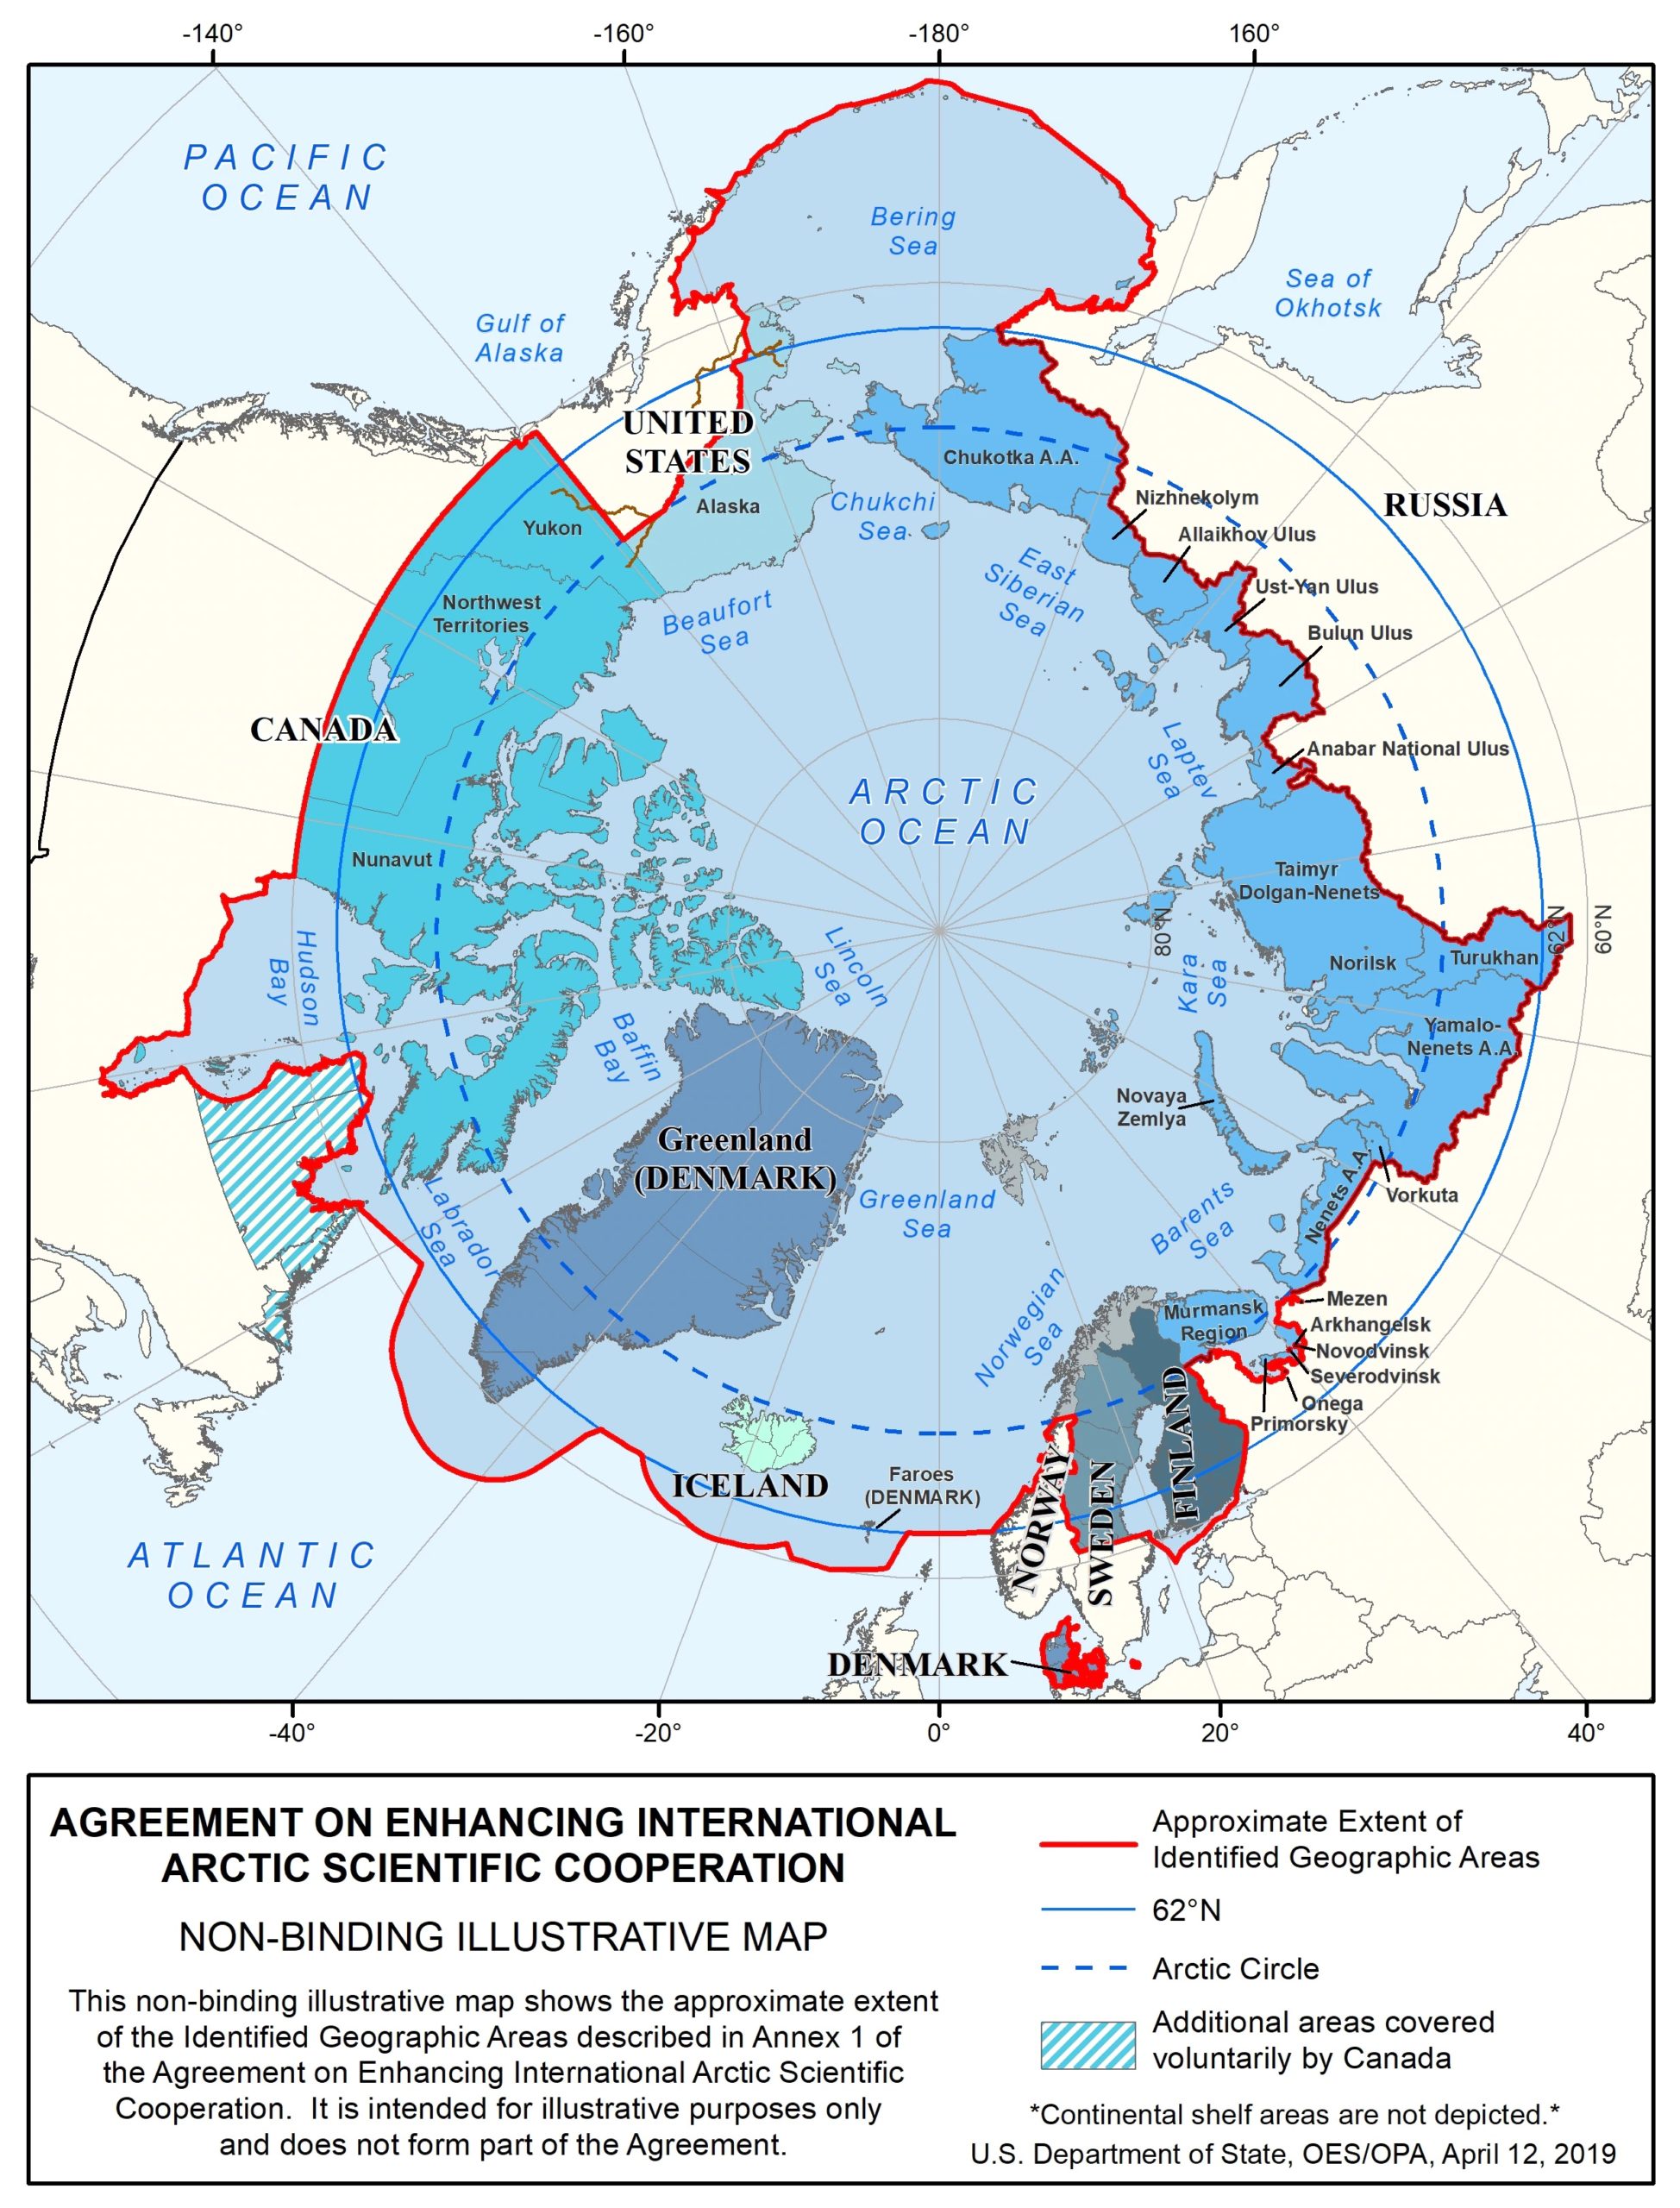 Arctic Region Governance of the Arctic